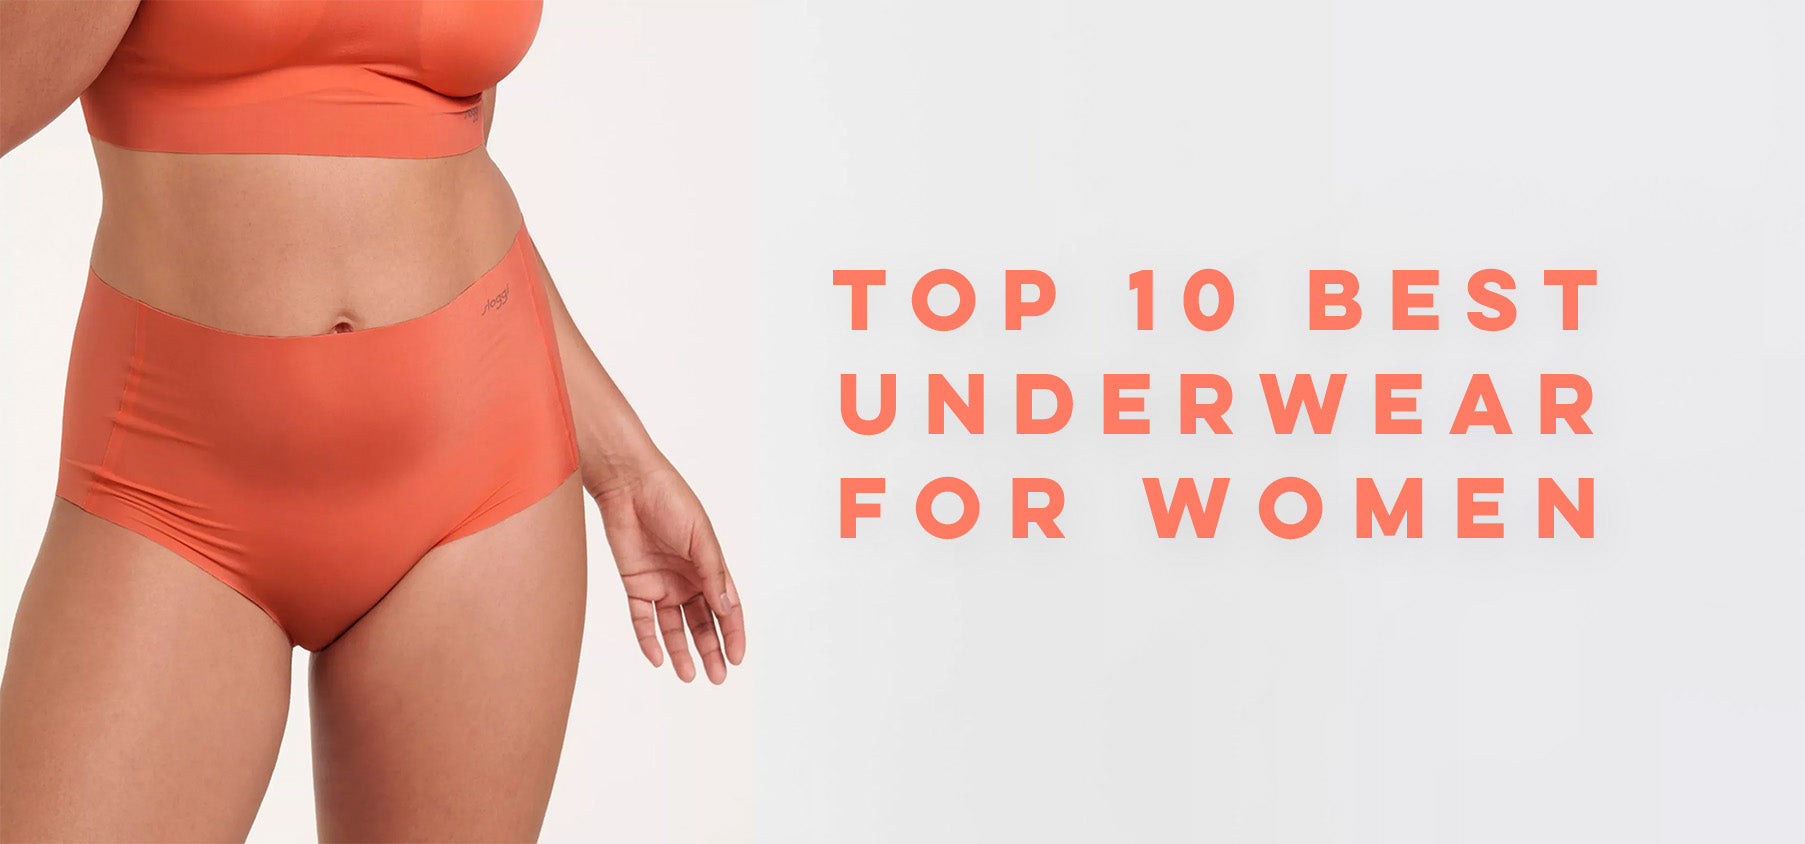 Top 10 best underwear for women